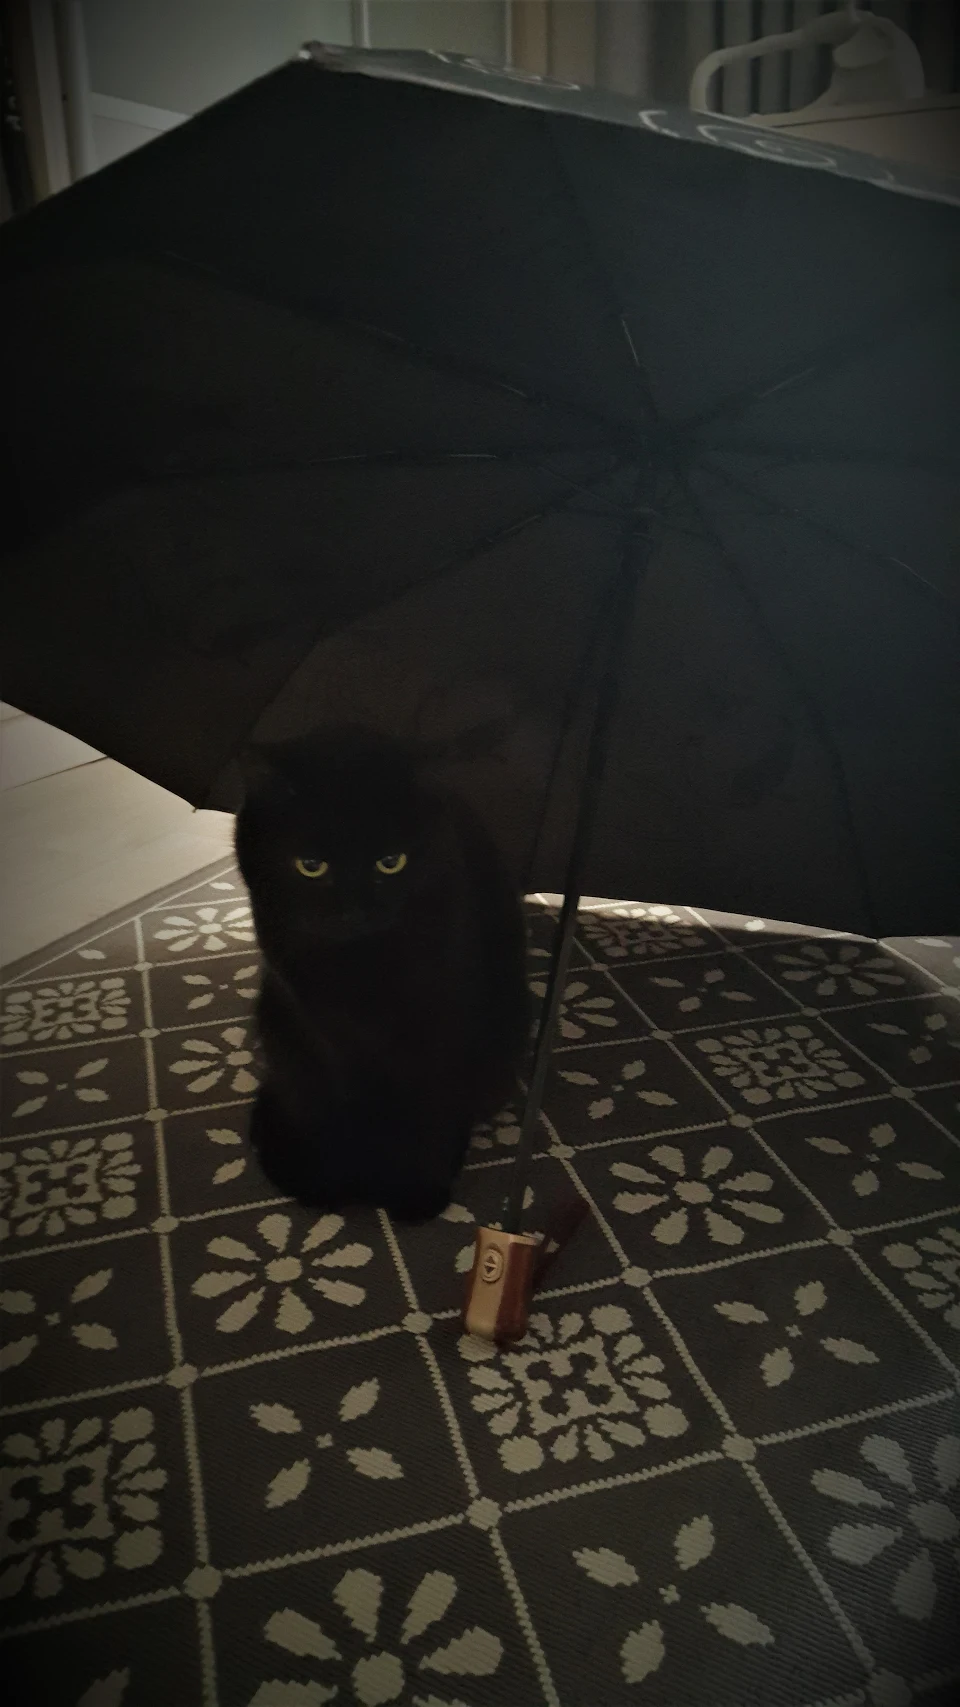 How cozy under the umbrella!